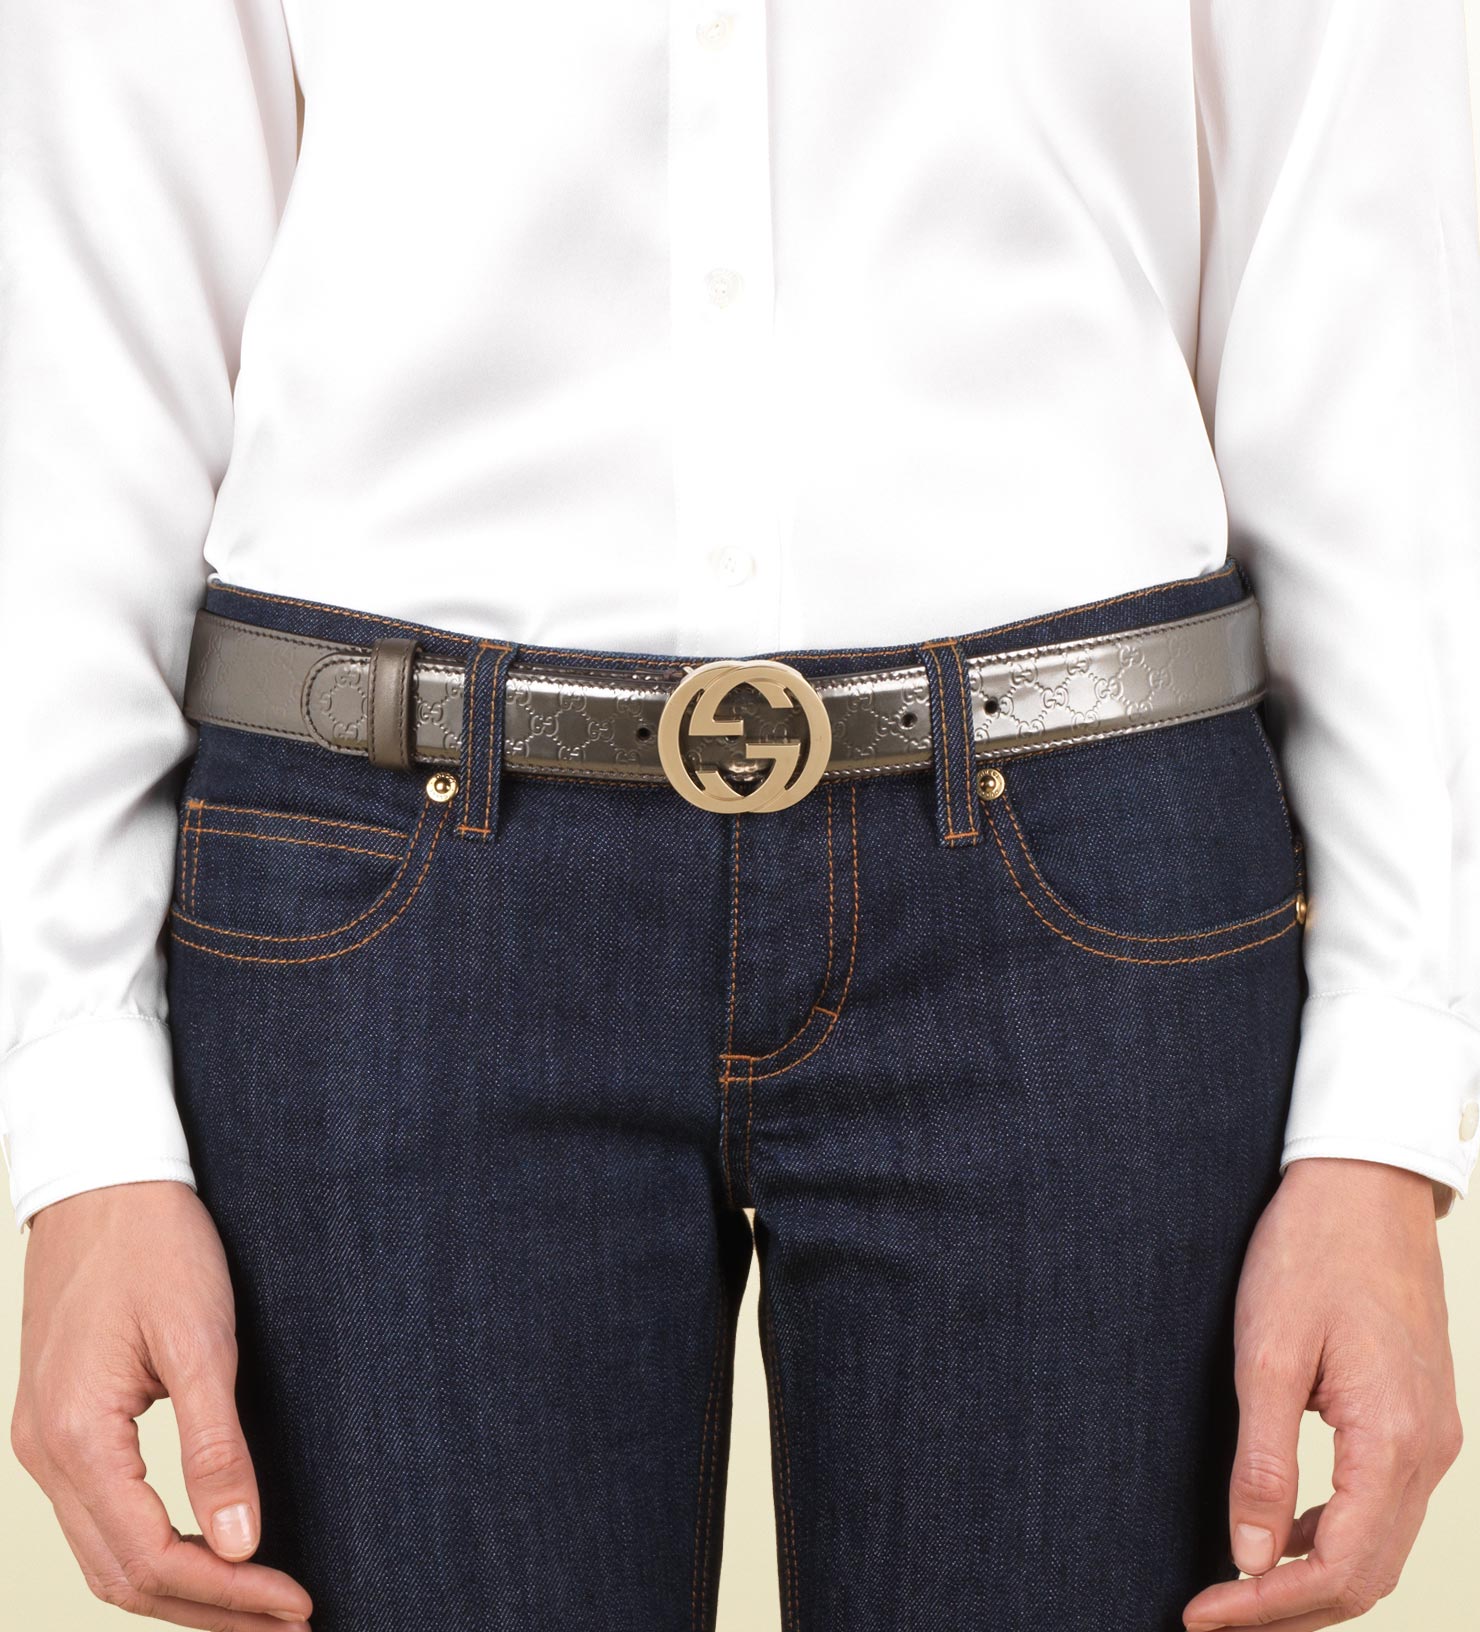 Lyst - Gucci Belt with Interlocking G Buckle in Blue